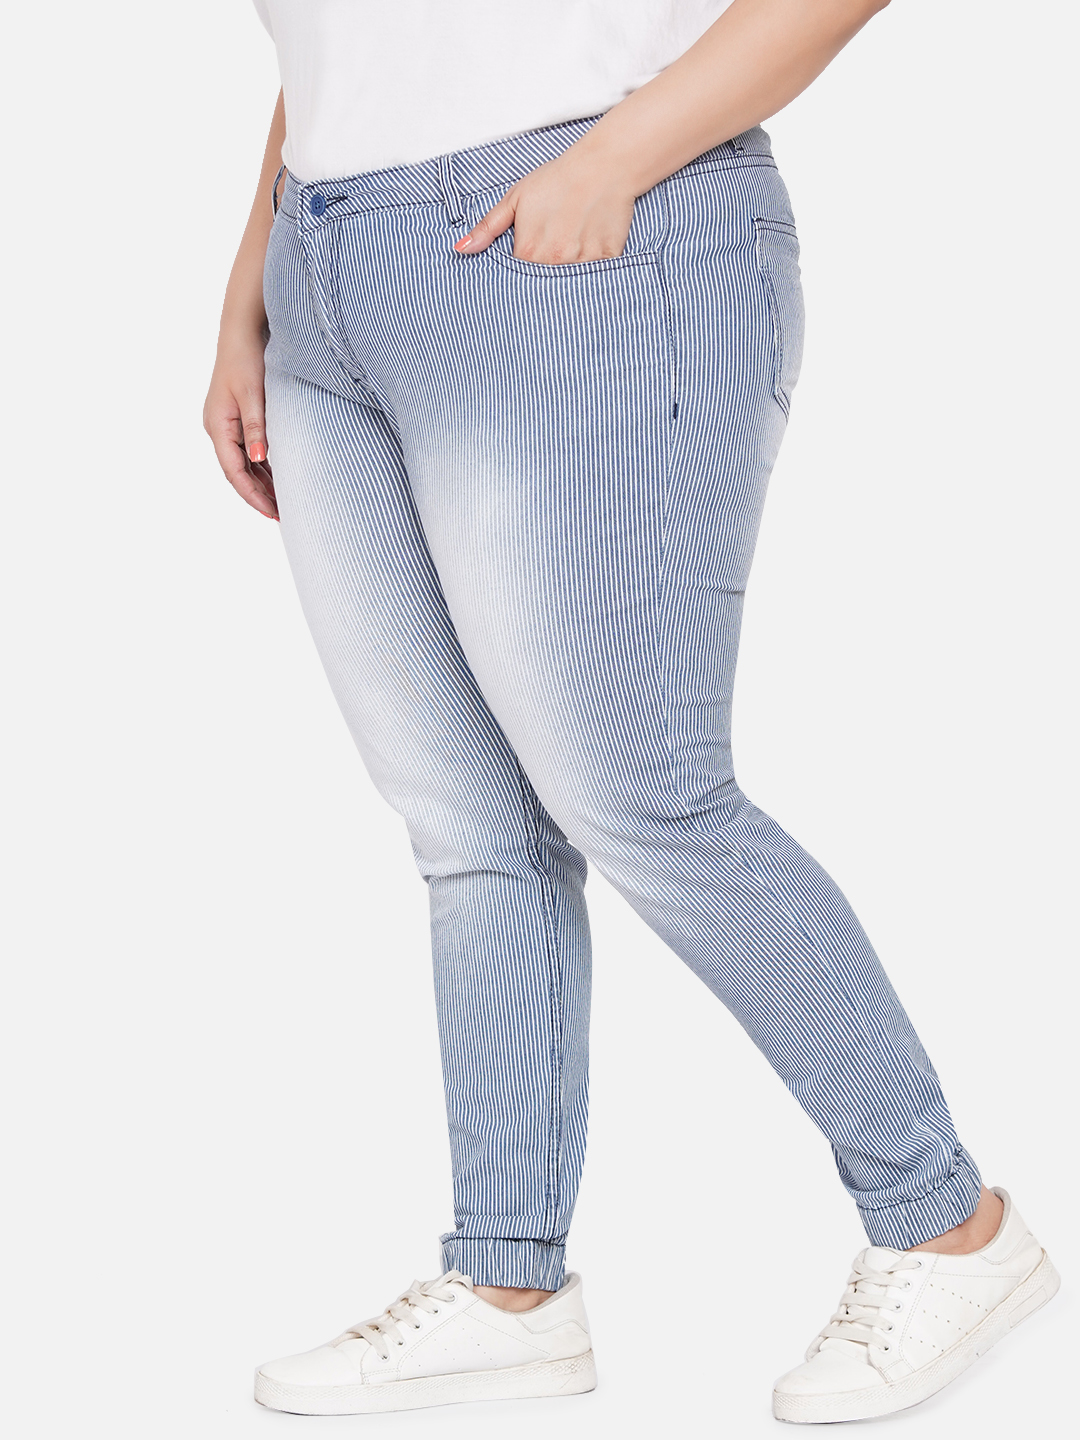 bottomwear_kiaahvi/jeans/KIAJ46/kiaj46-4.jpg